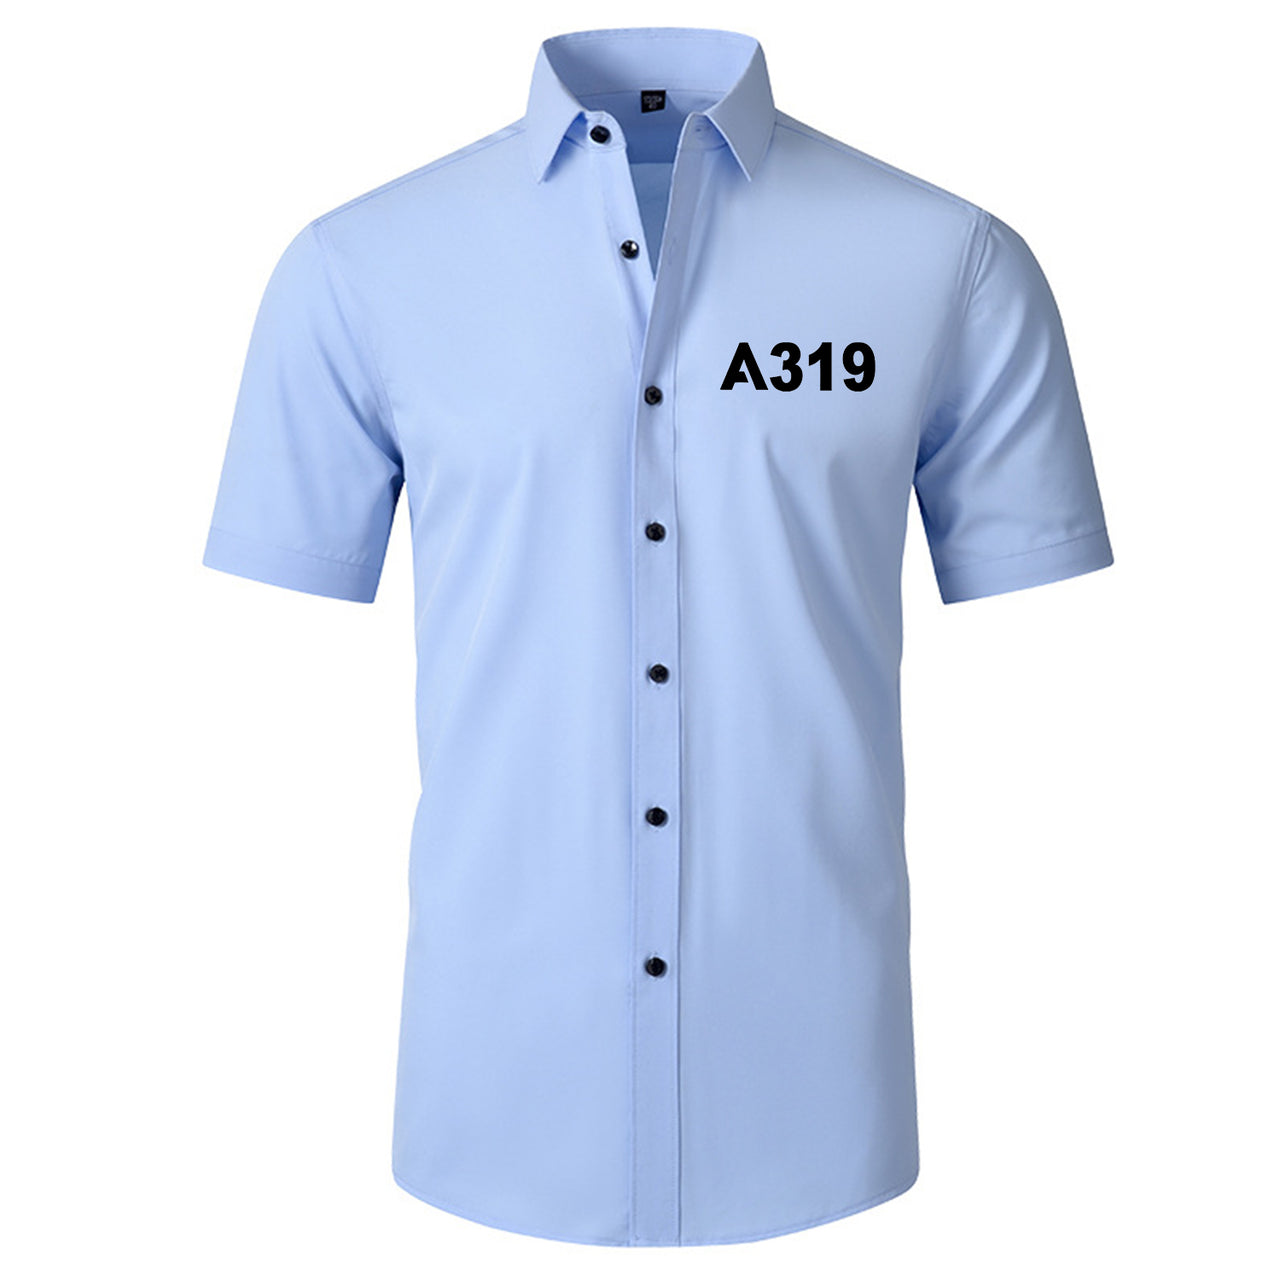 A319 Flat Text Designed Short Sleeve Shirts